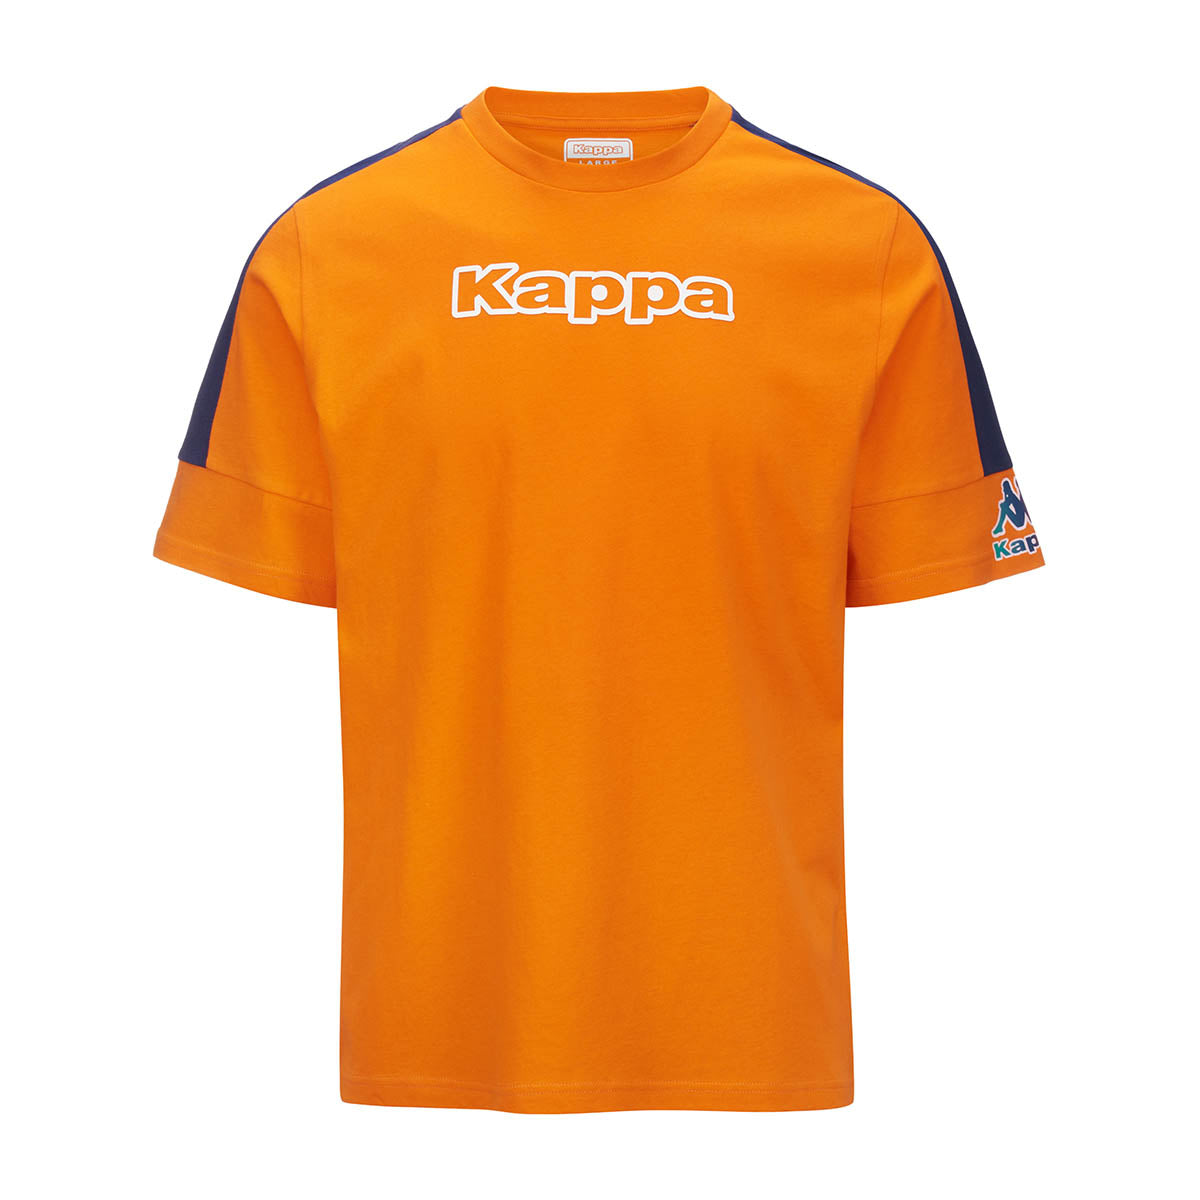 T-shirt Logo Fagiom Orange Homme